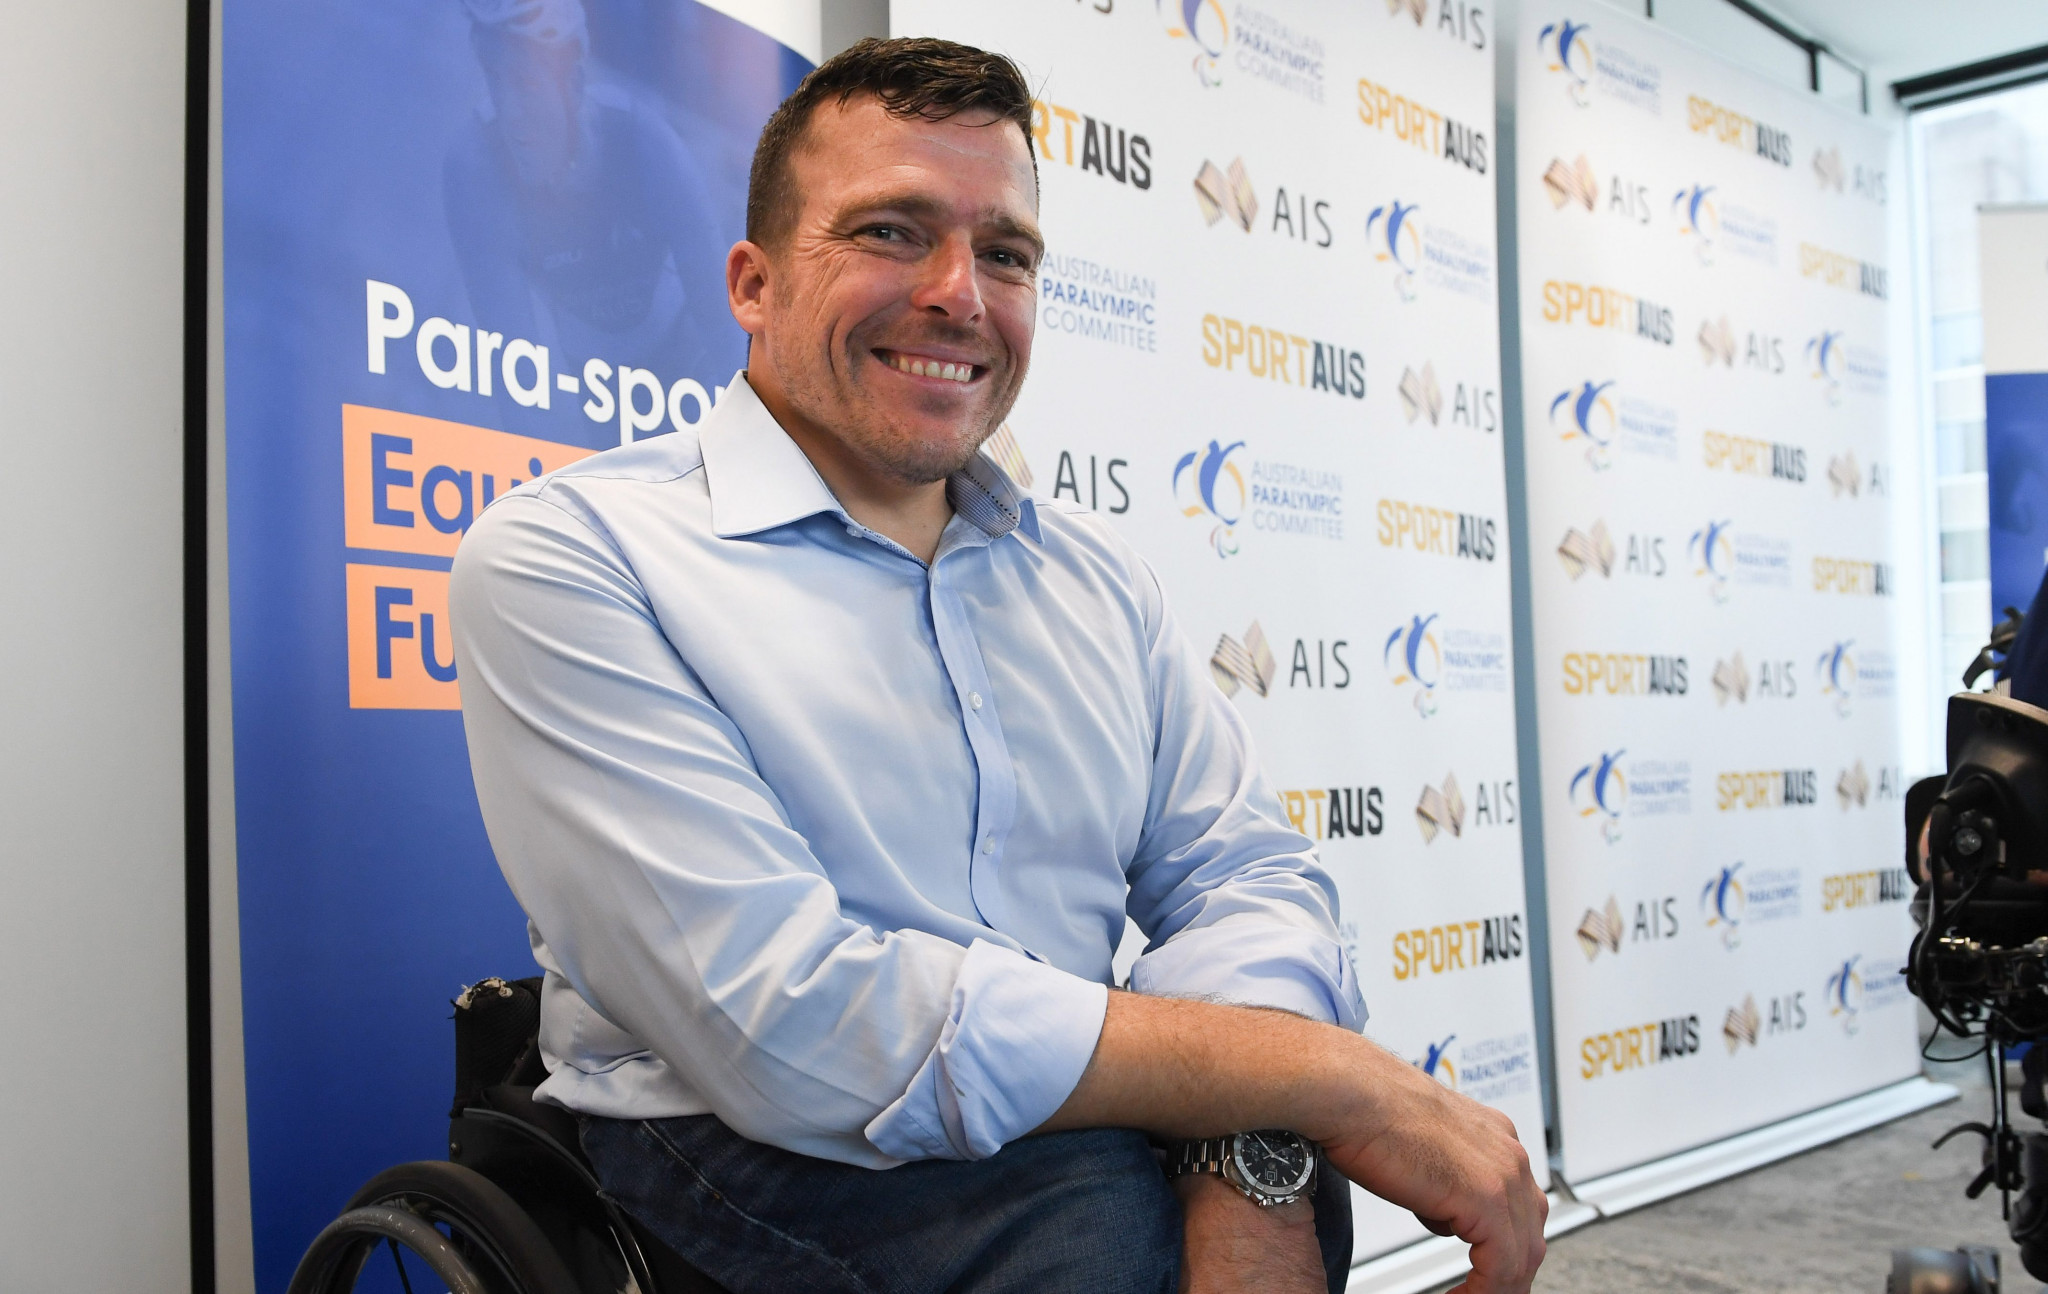 Paralympics Australia’s Para-sport Equipment Fund celebrates first corporate donation